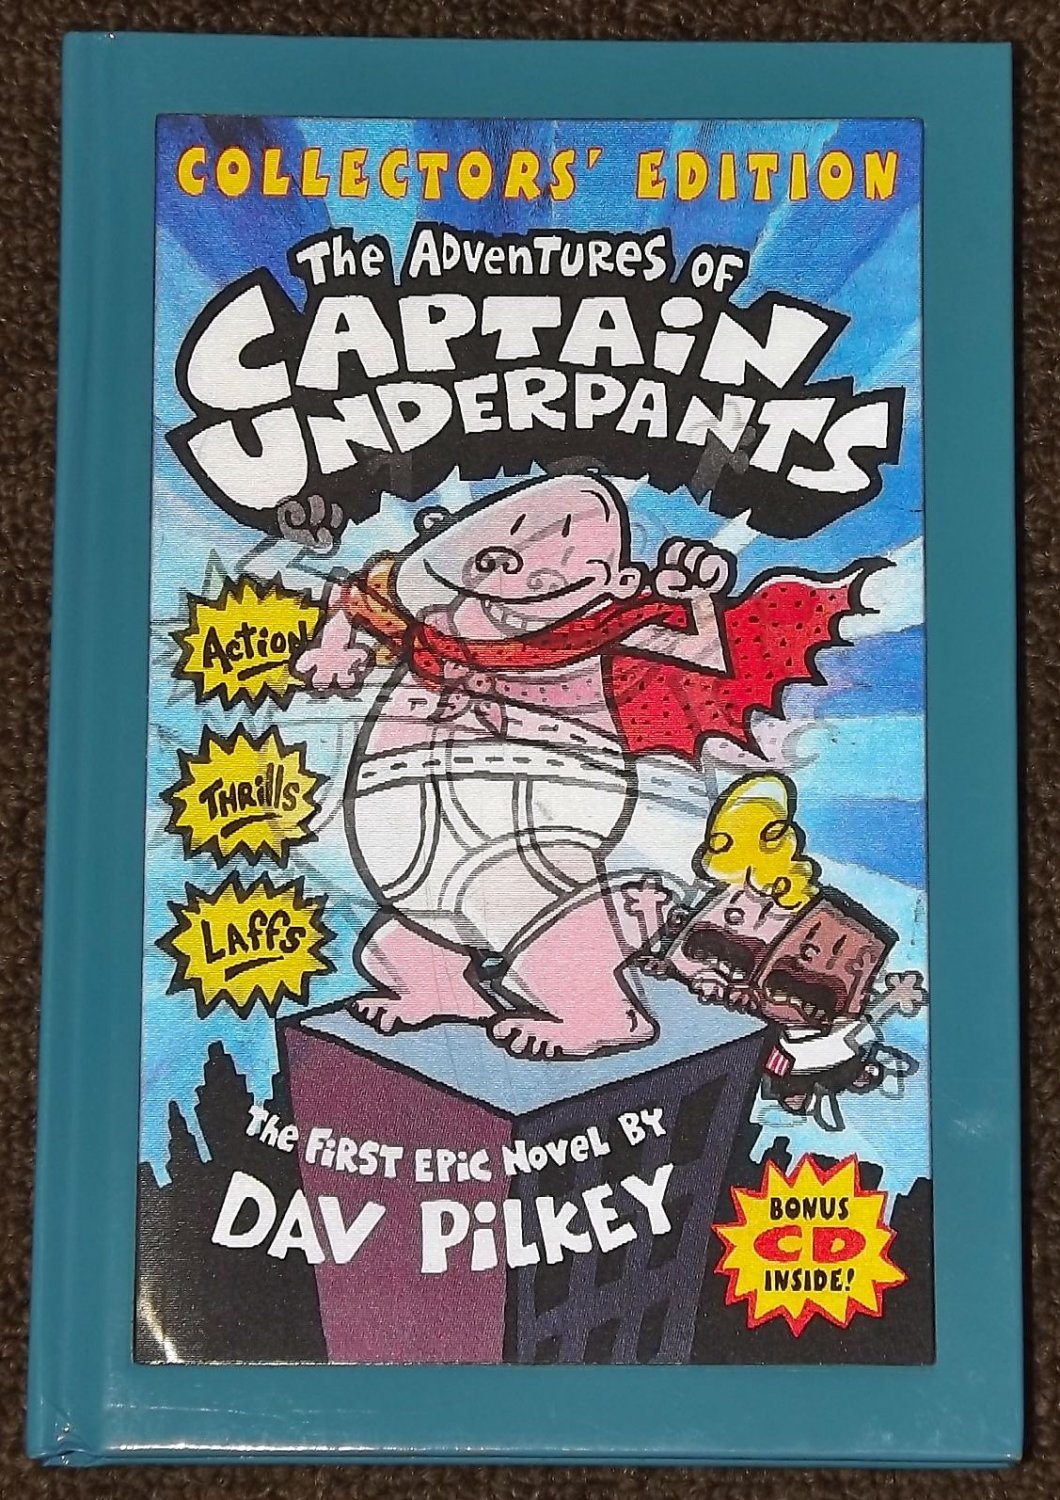 the adventures of captain underpants dav pilkey